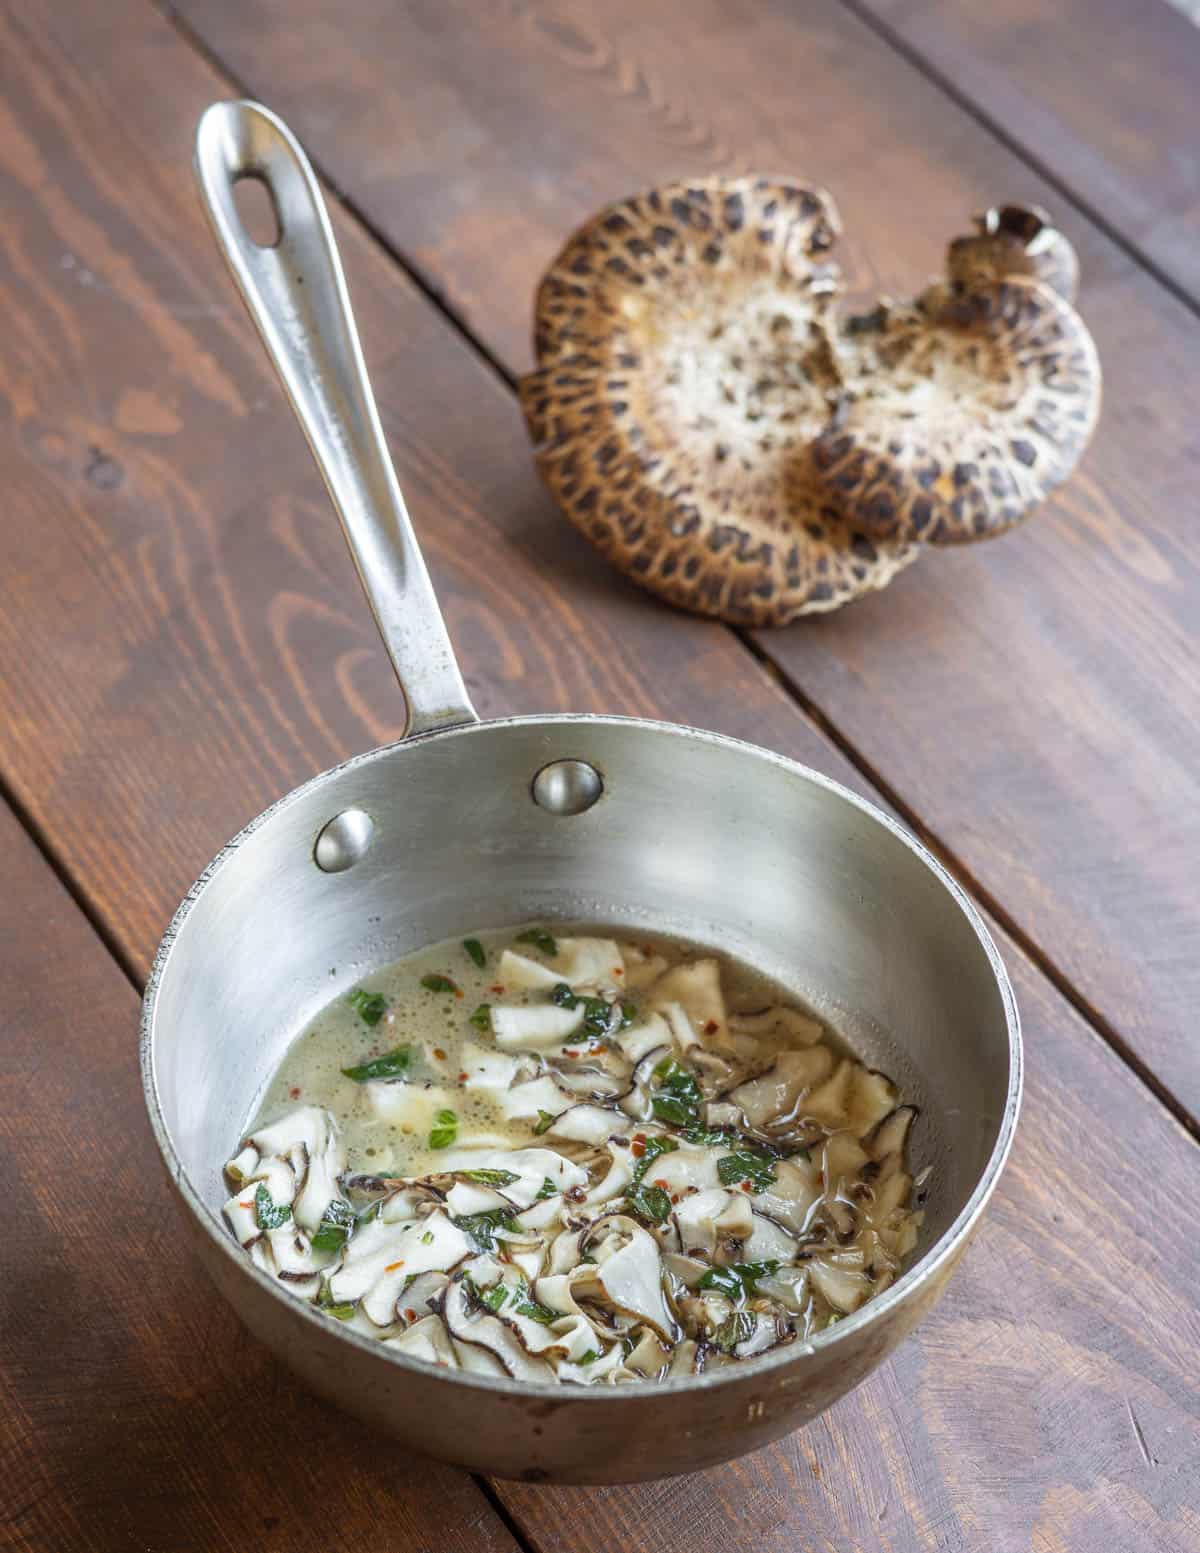 White wine pheasant back or dryad saddle mushrooms recipe with garlic and herbs